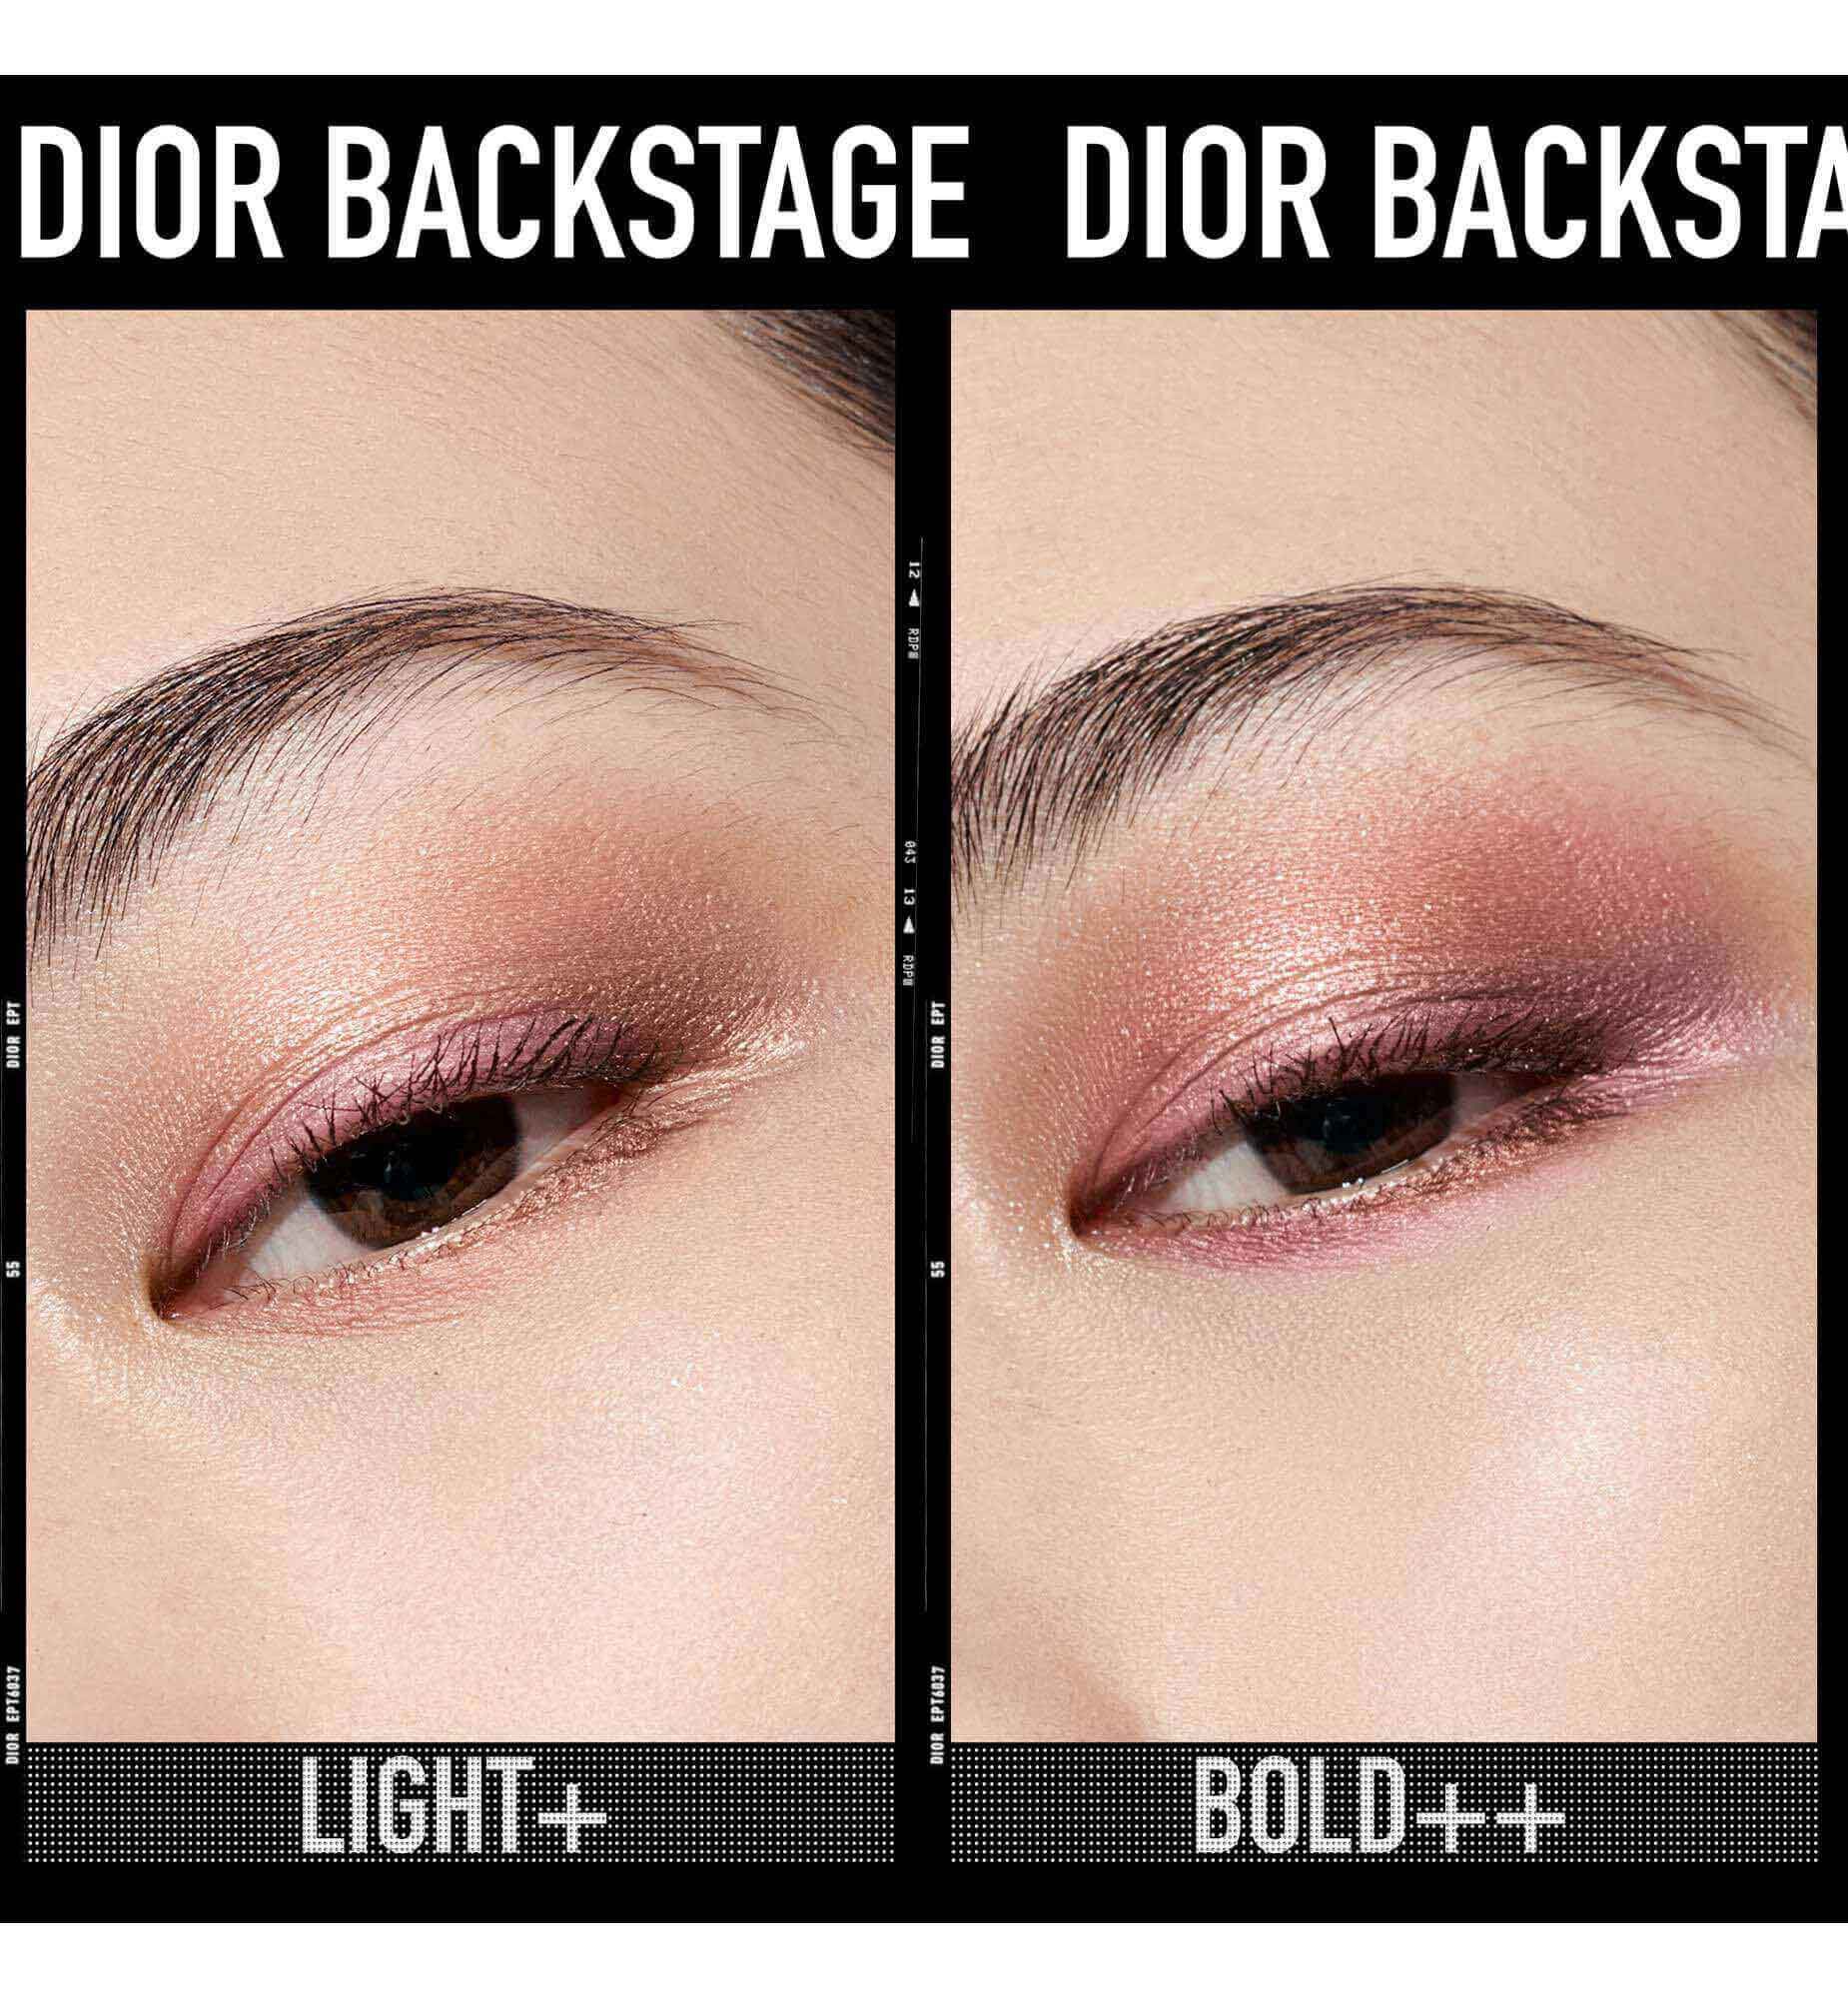 Christian Dior  Dior Backstage Paleta de Ojos 10g035oz  Sets  Coffrets   Free Worldwide Shipping  Strawberrynet CL